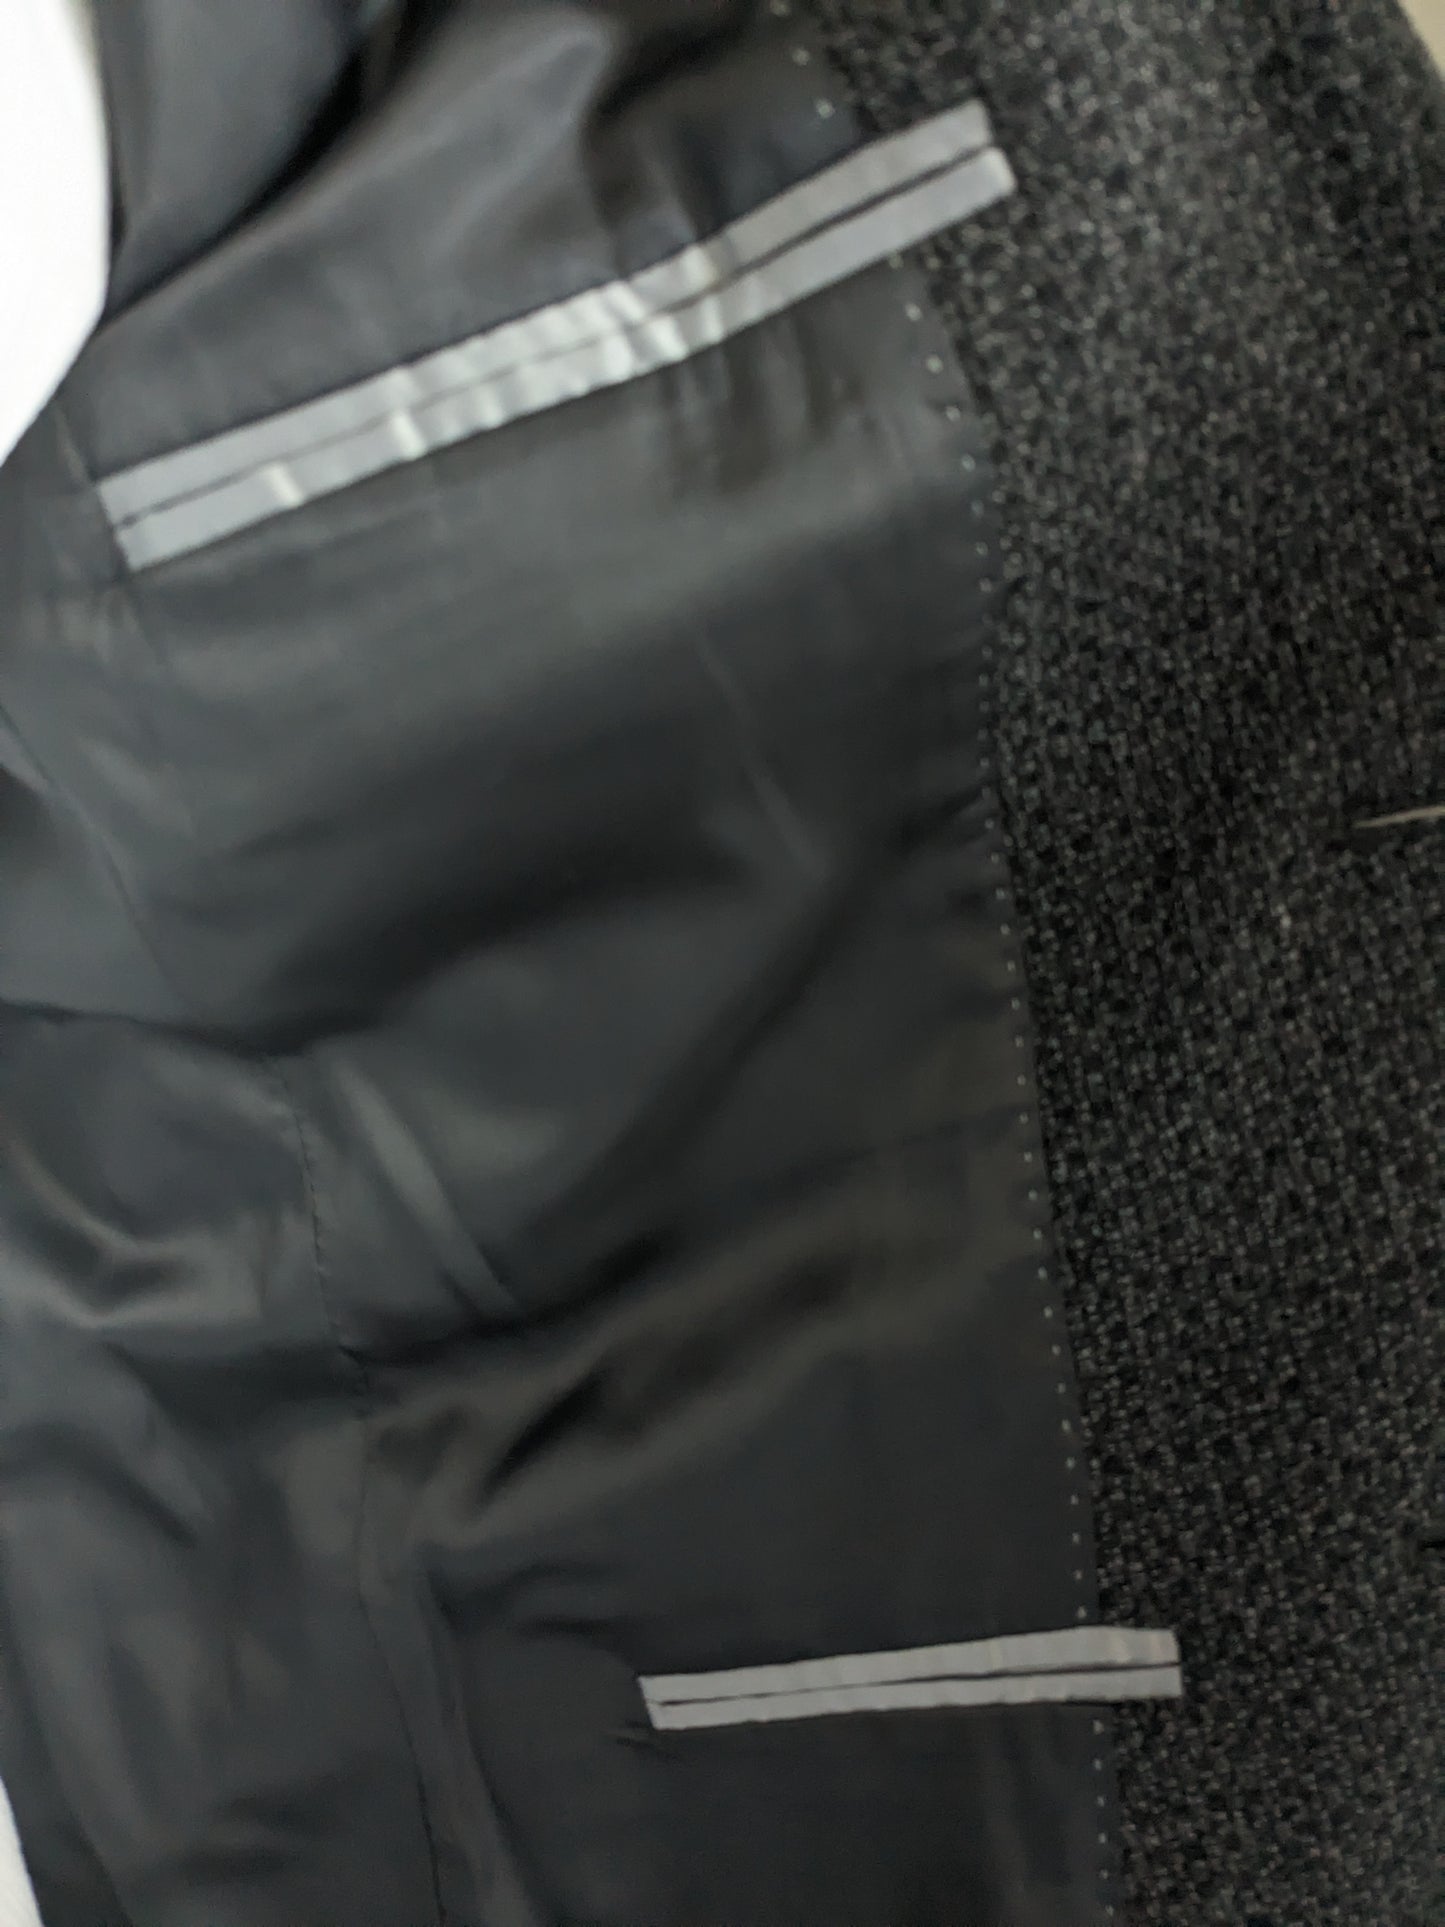 CK Calvin Klein Woolen Chaqueta. Motif gris negro mixto. Tamaño 50 / M. Línea de ajuste Slim.